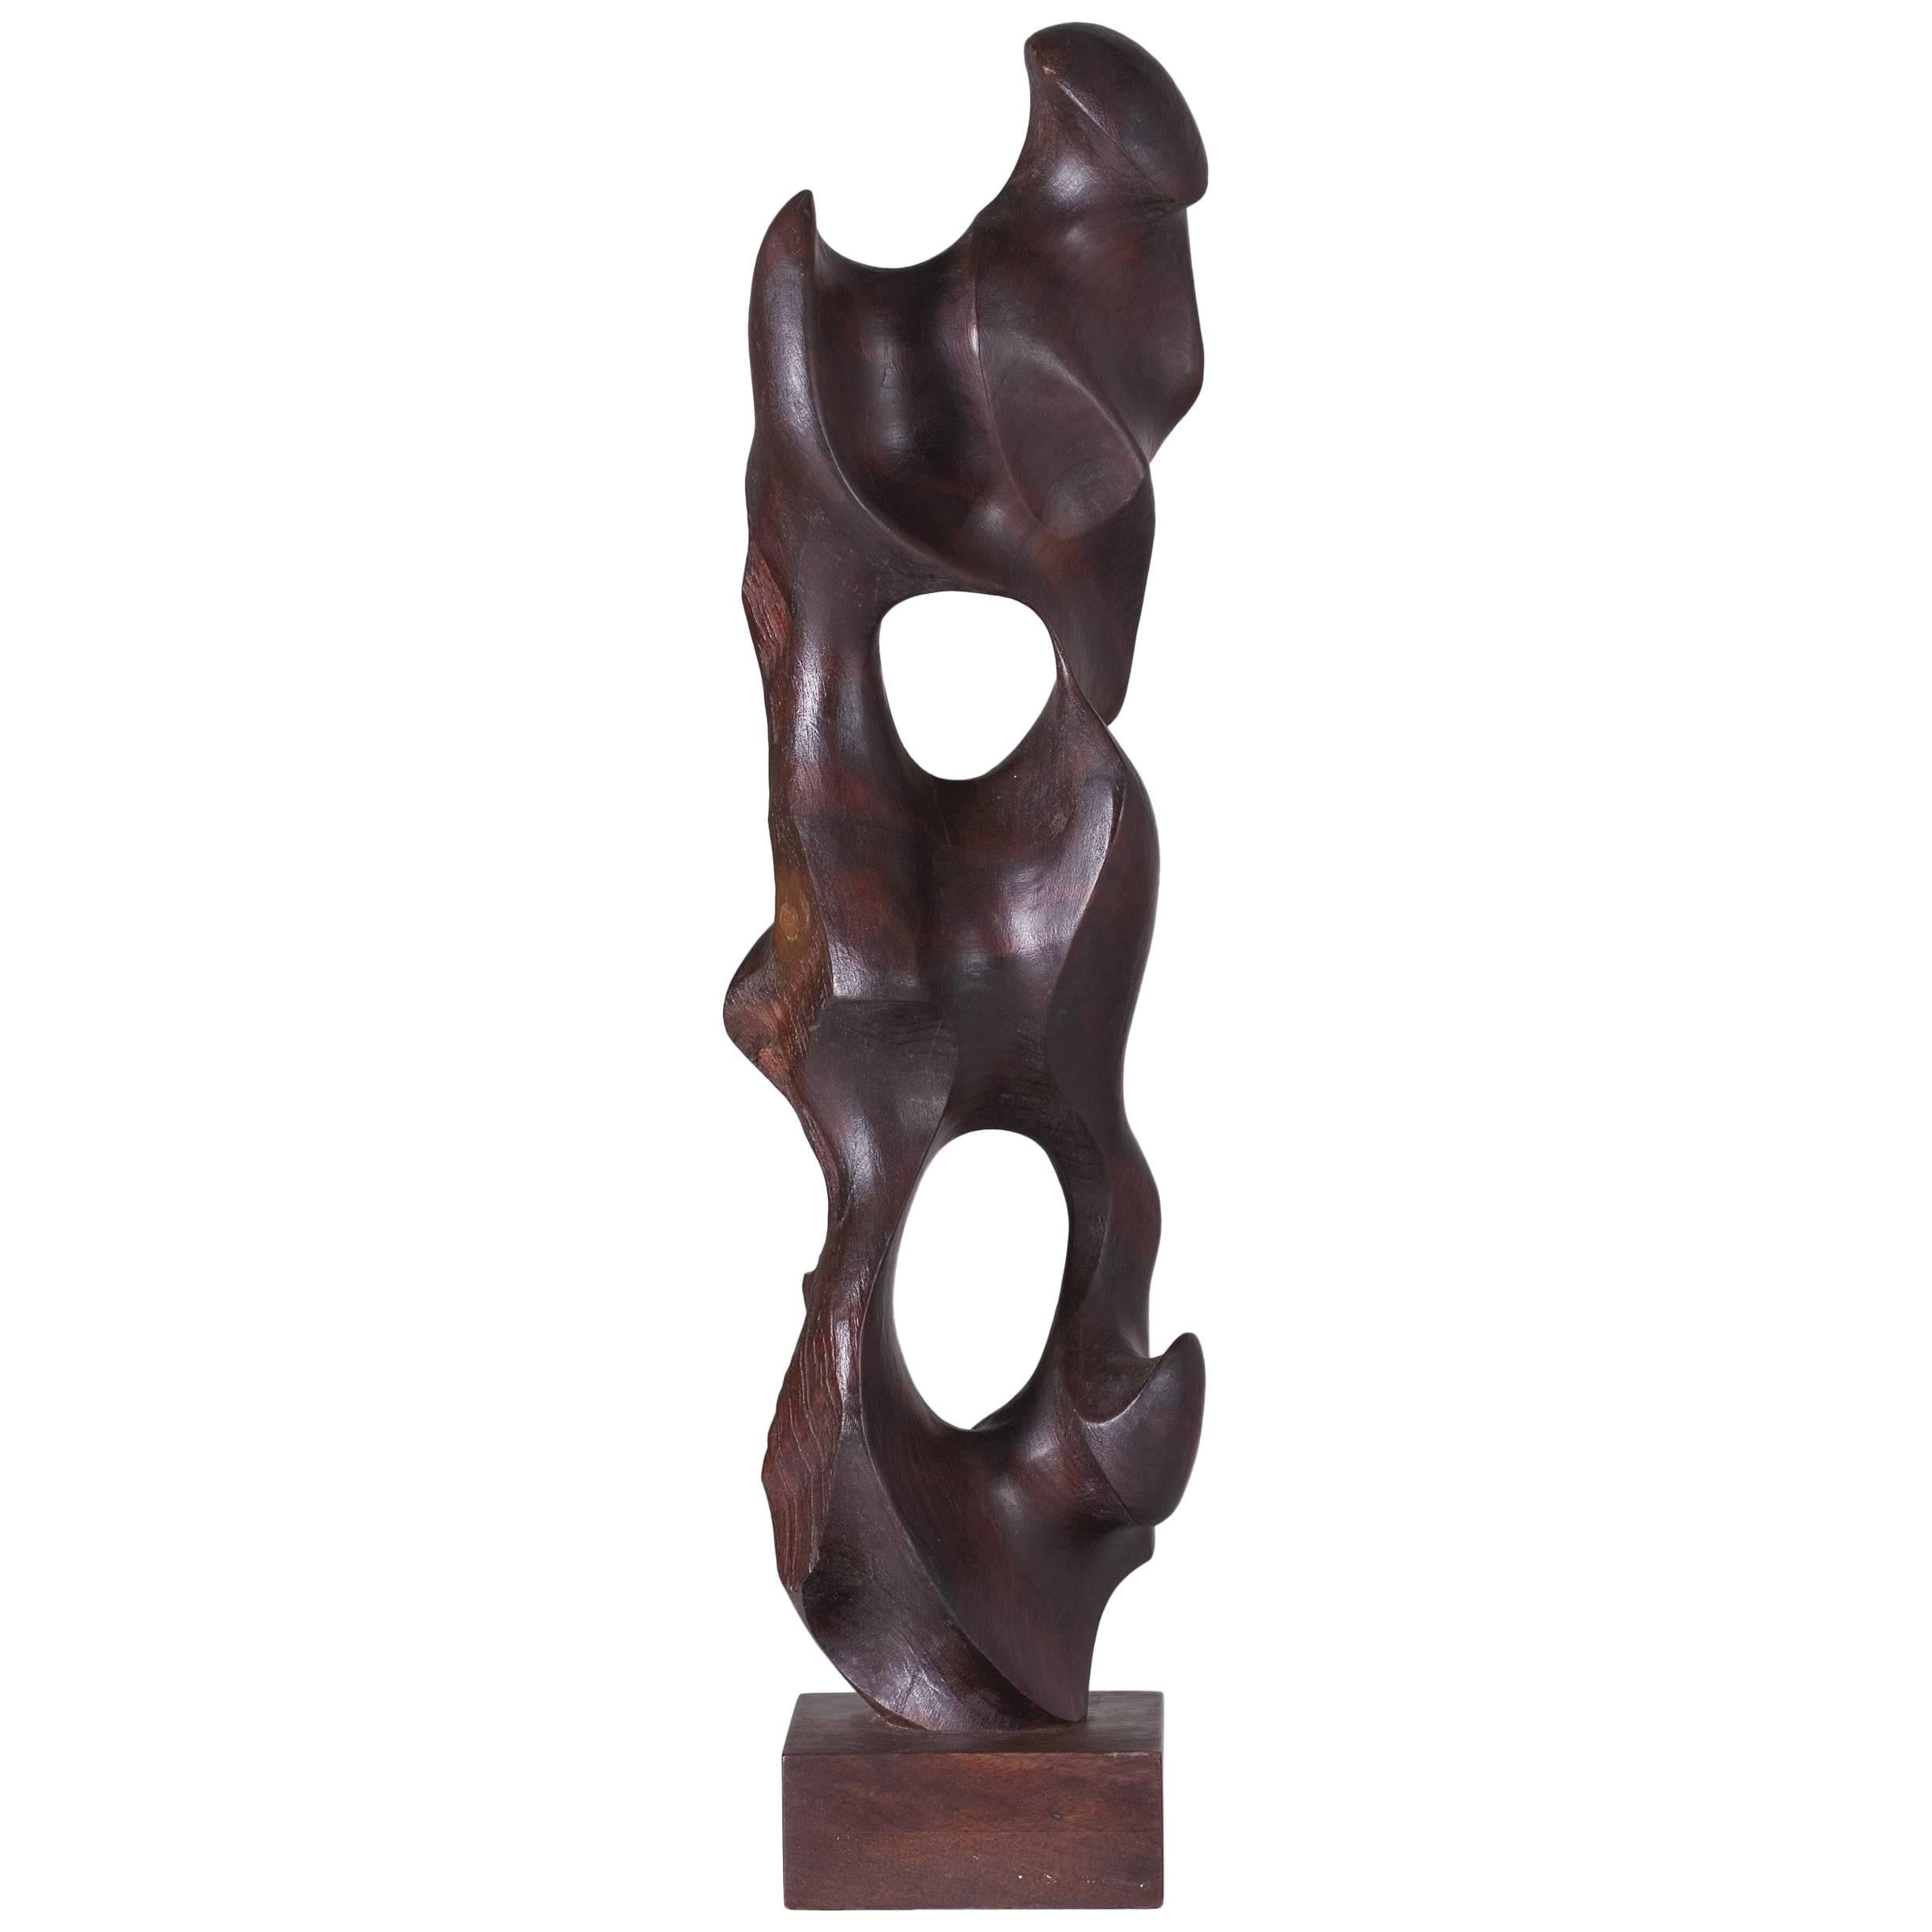 Mario Dal Fabbro, Wood Sculpture, United States, 1983